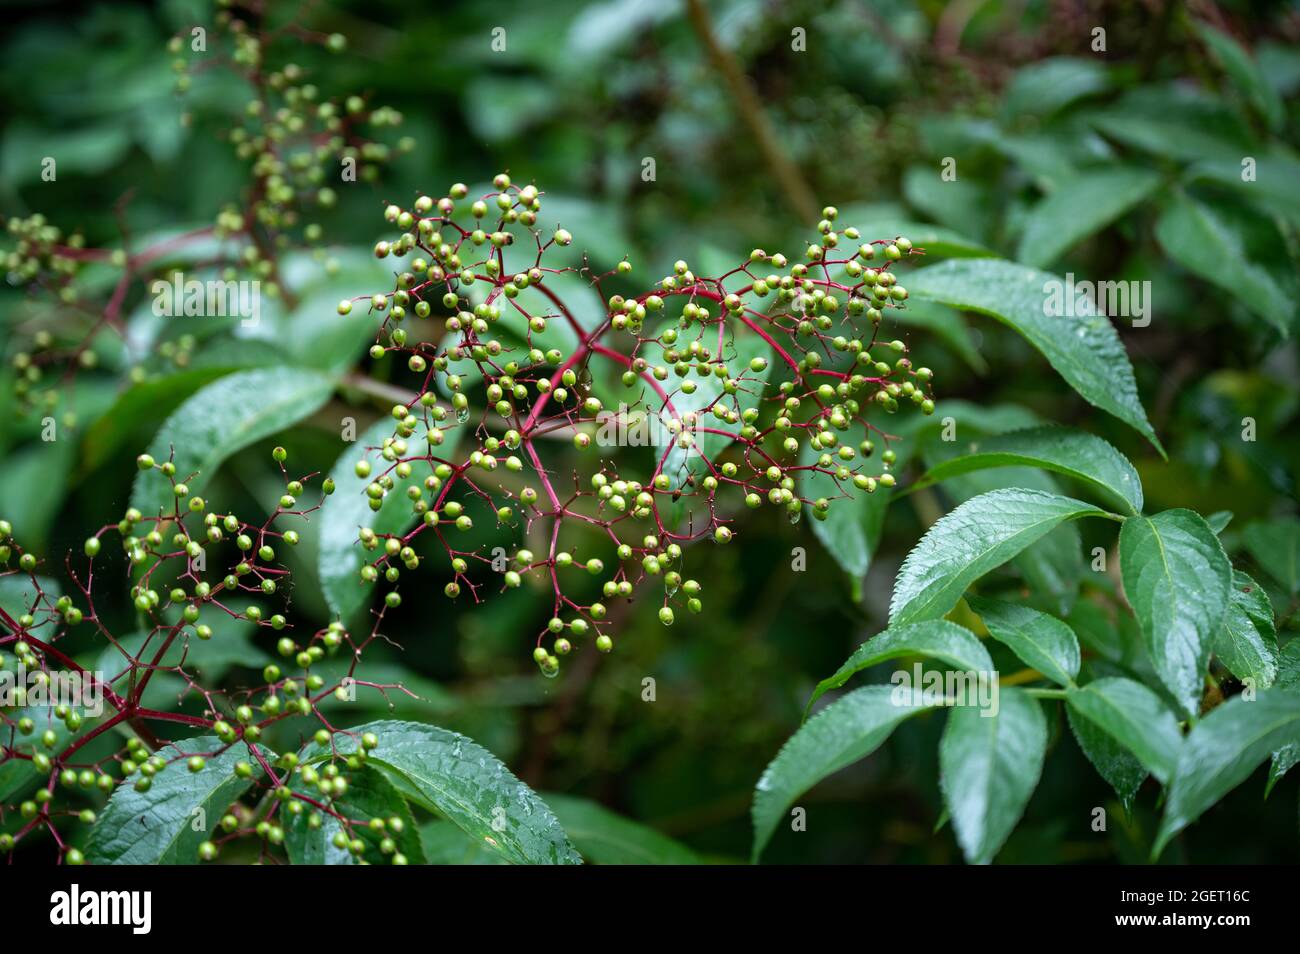 Mass of small green elderberries waiting to ripen. Stock Photo